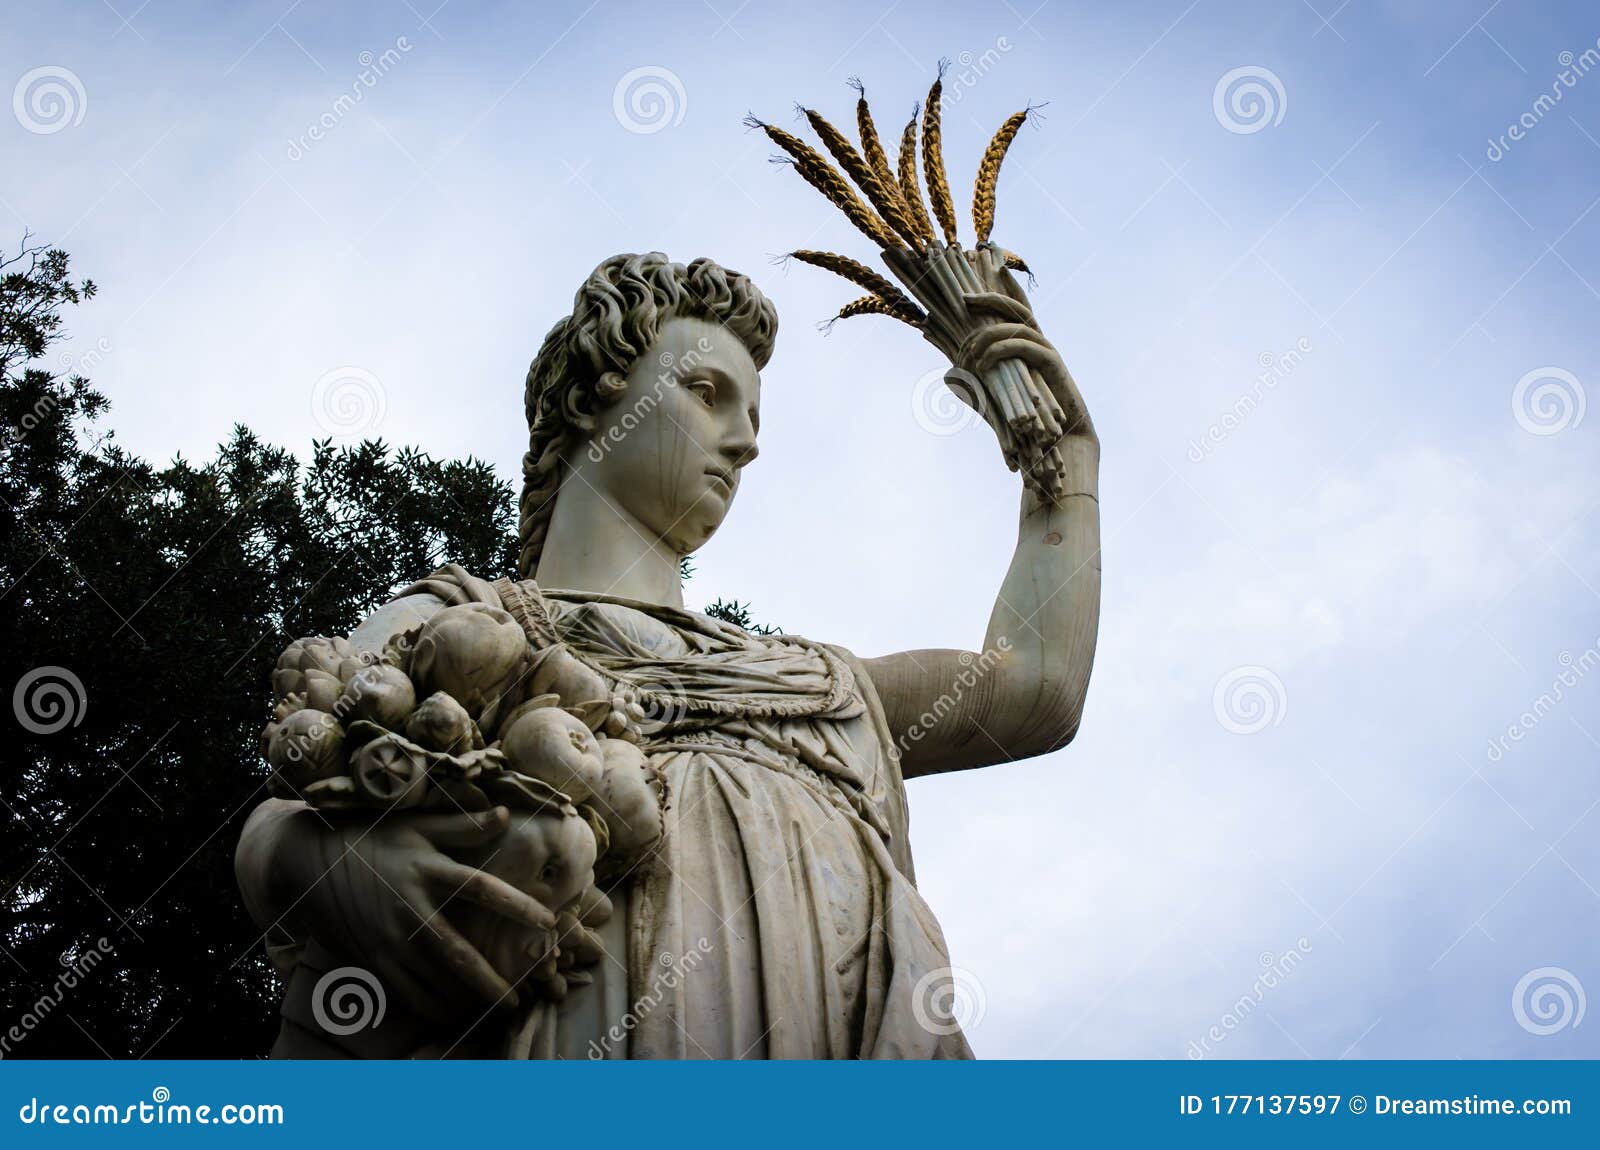 opi goddess of abundance in the garden of boboli in florence italy